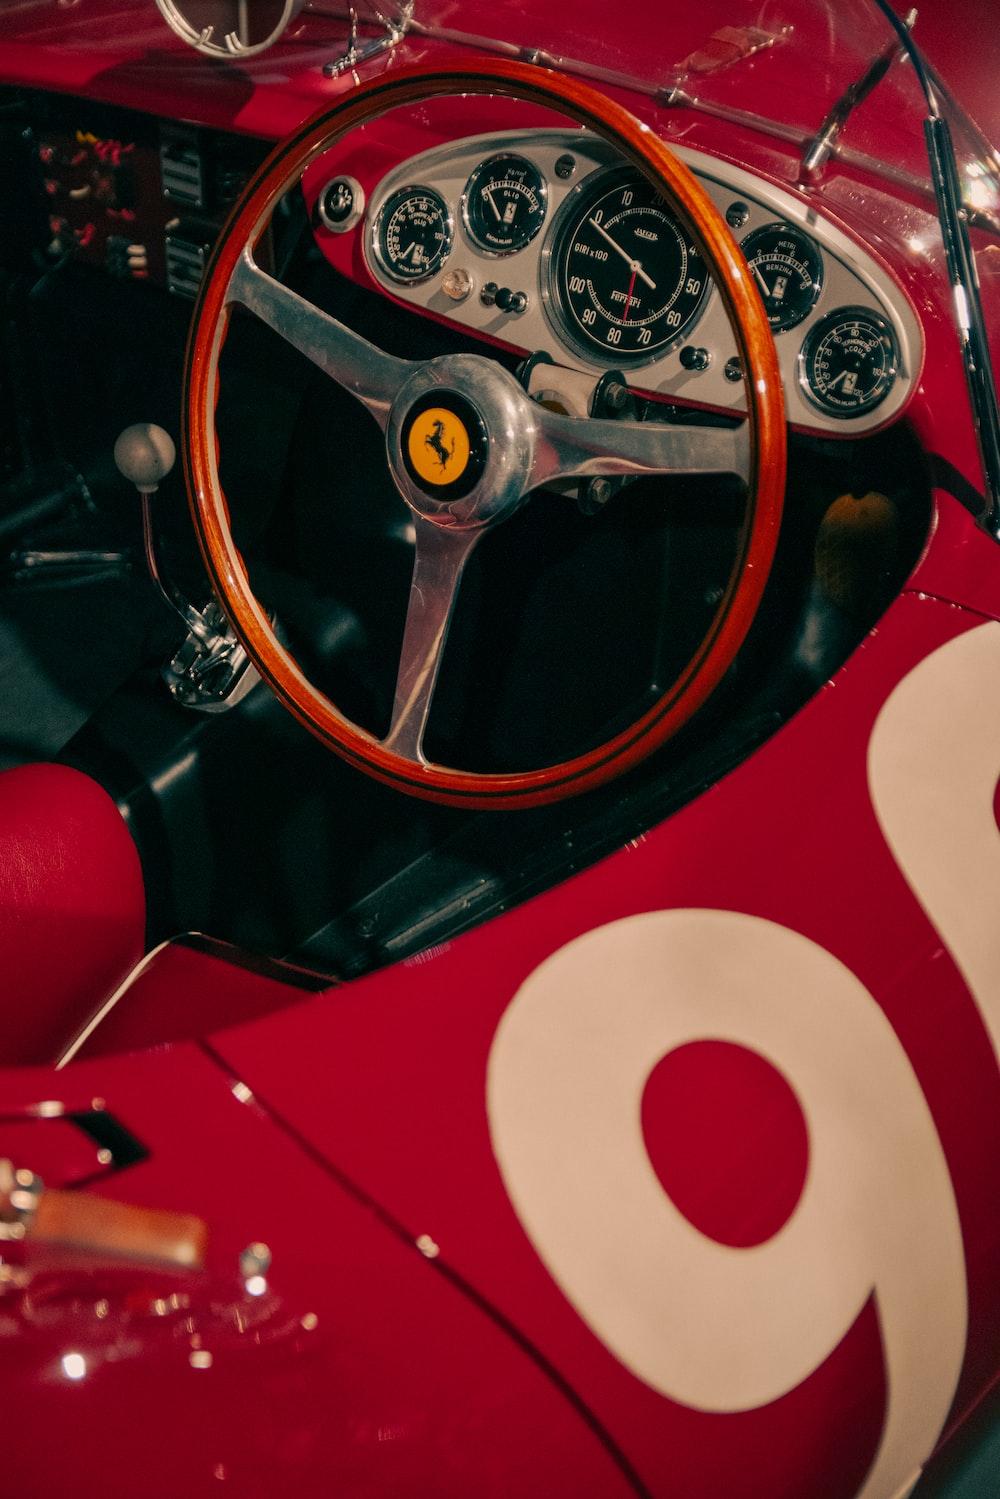 Vintage Ferrari Pictures Image